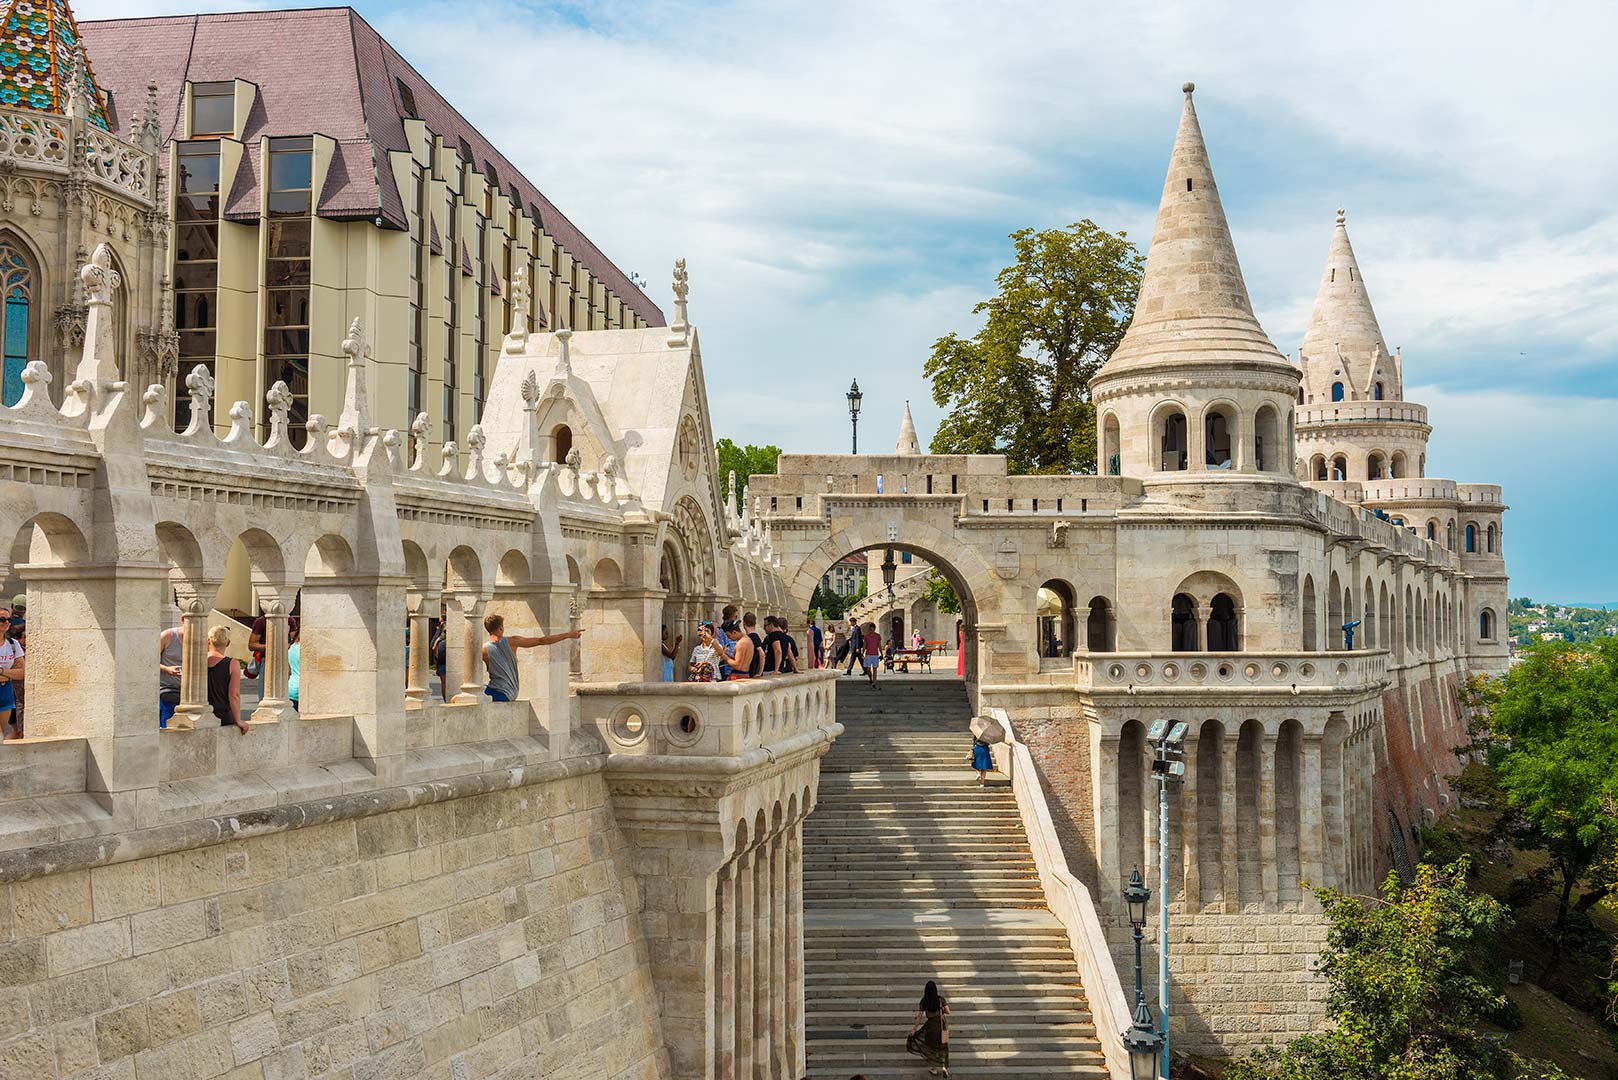 BUDAPEST, HUNGARY